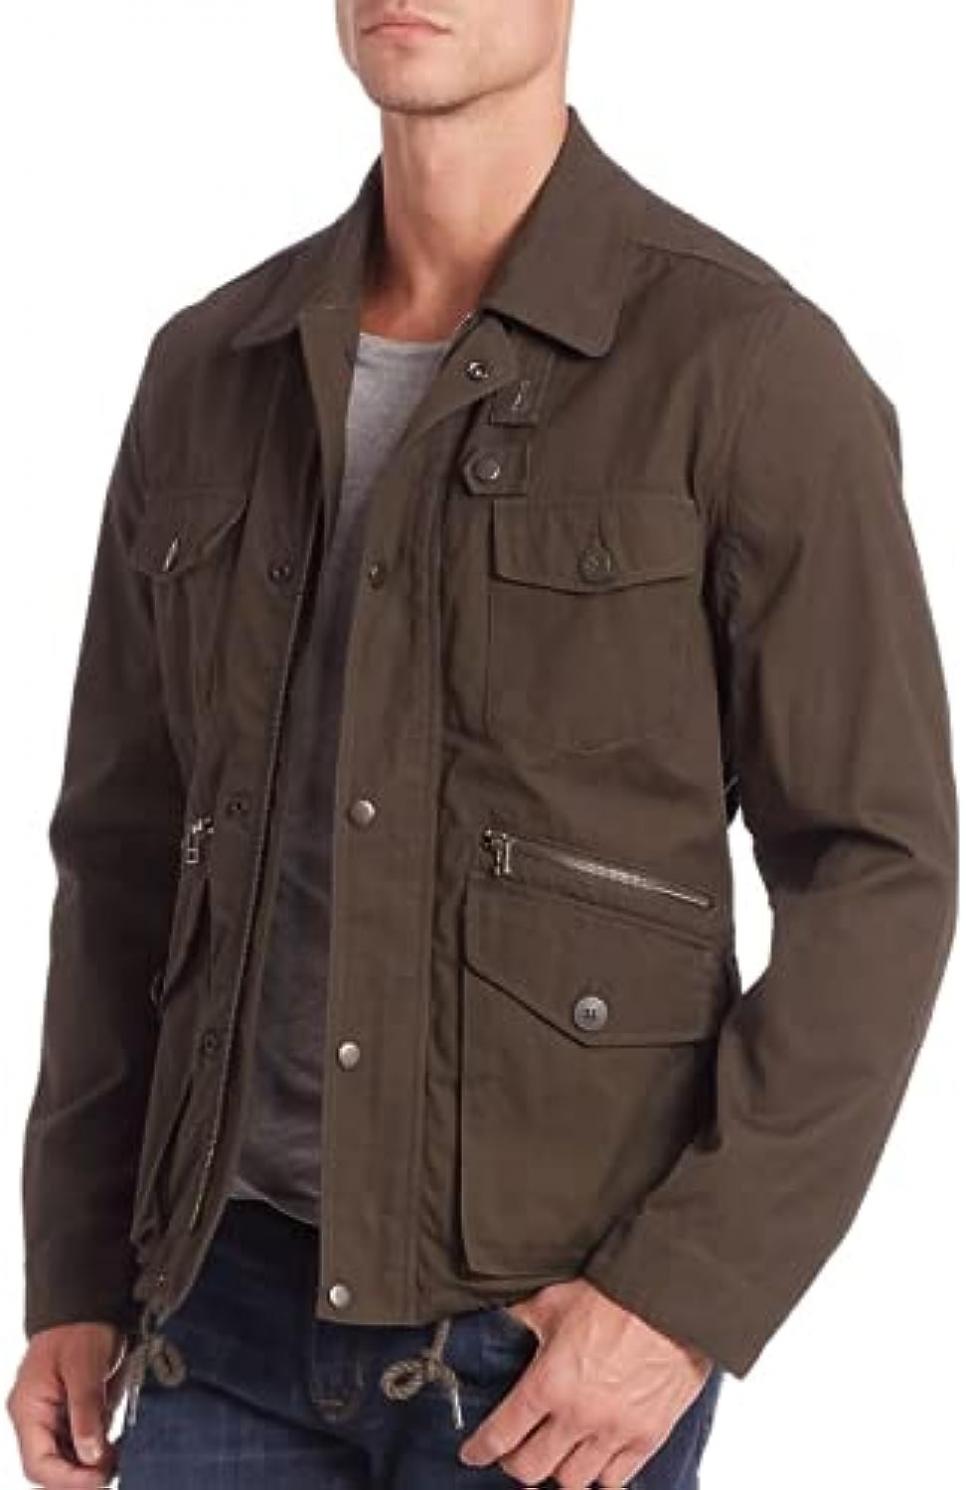 SAKS FIFTH AVENUE Modern Hunting Jacket in Olive Size Large